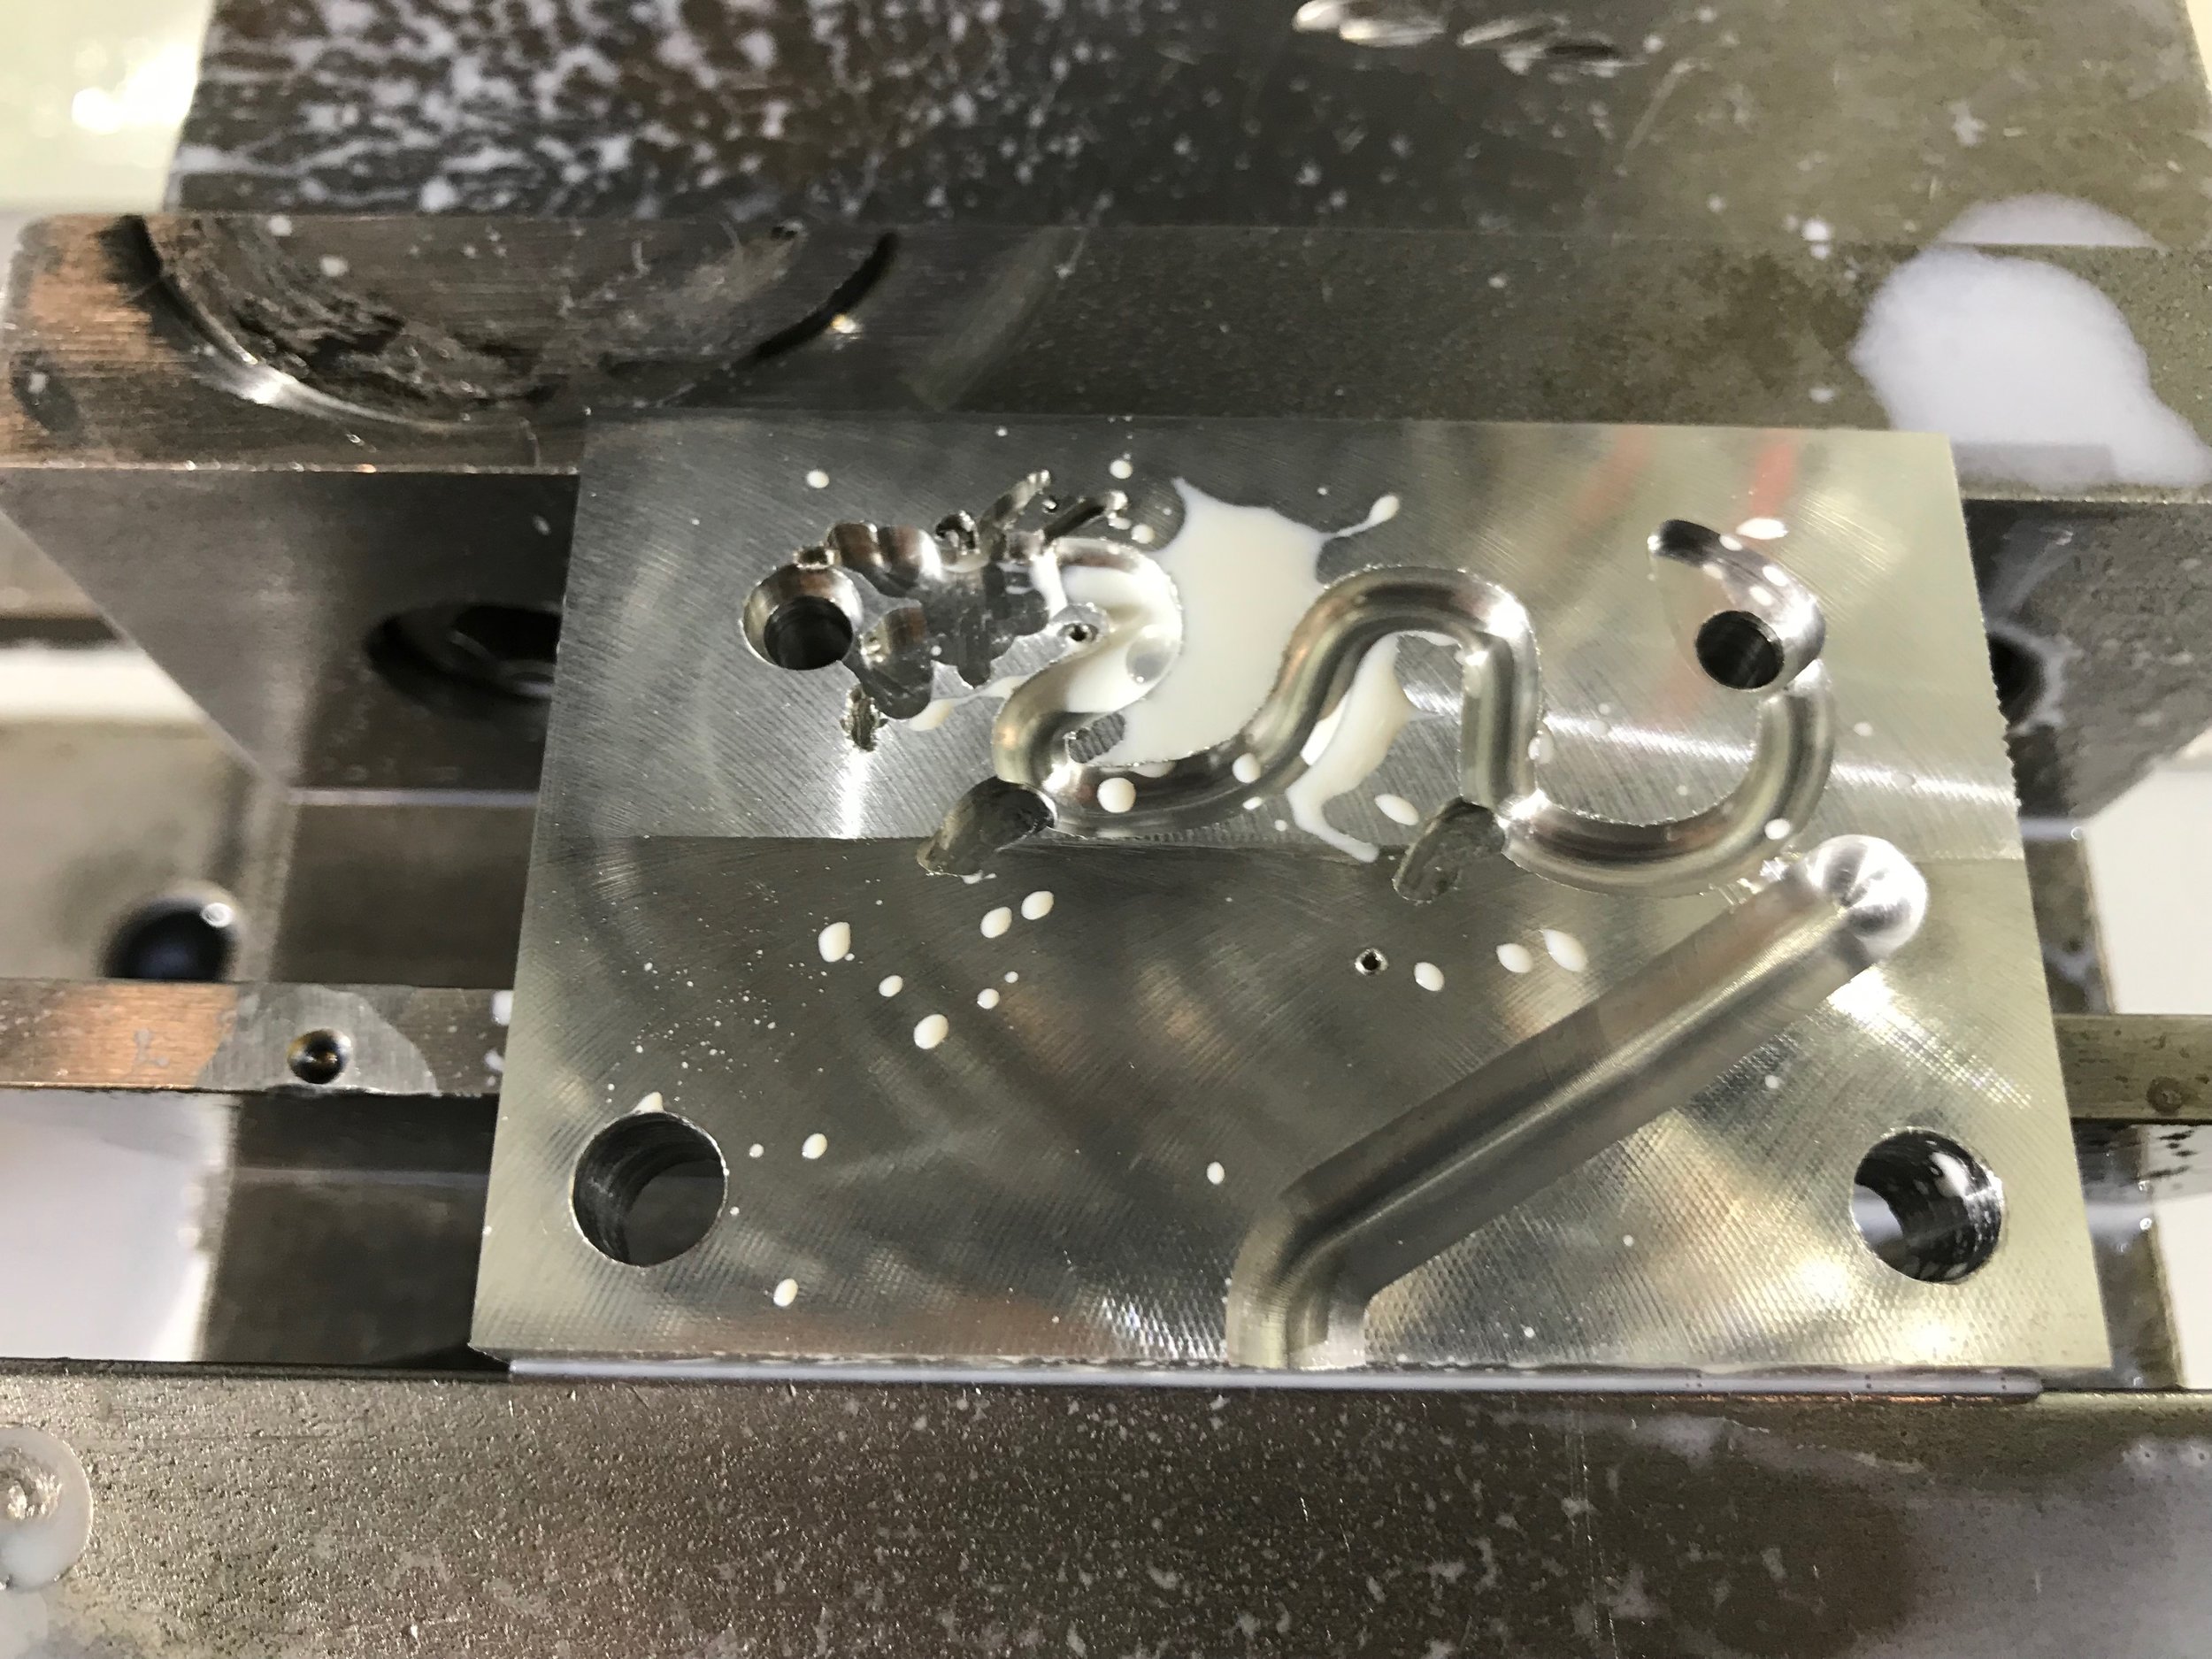 Mold design, post CNC milling